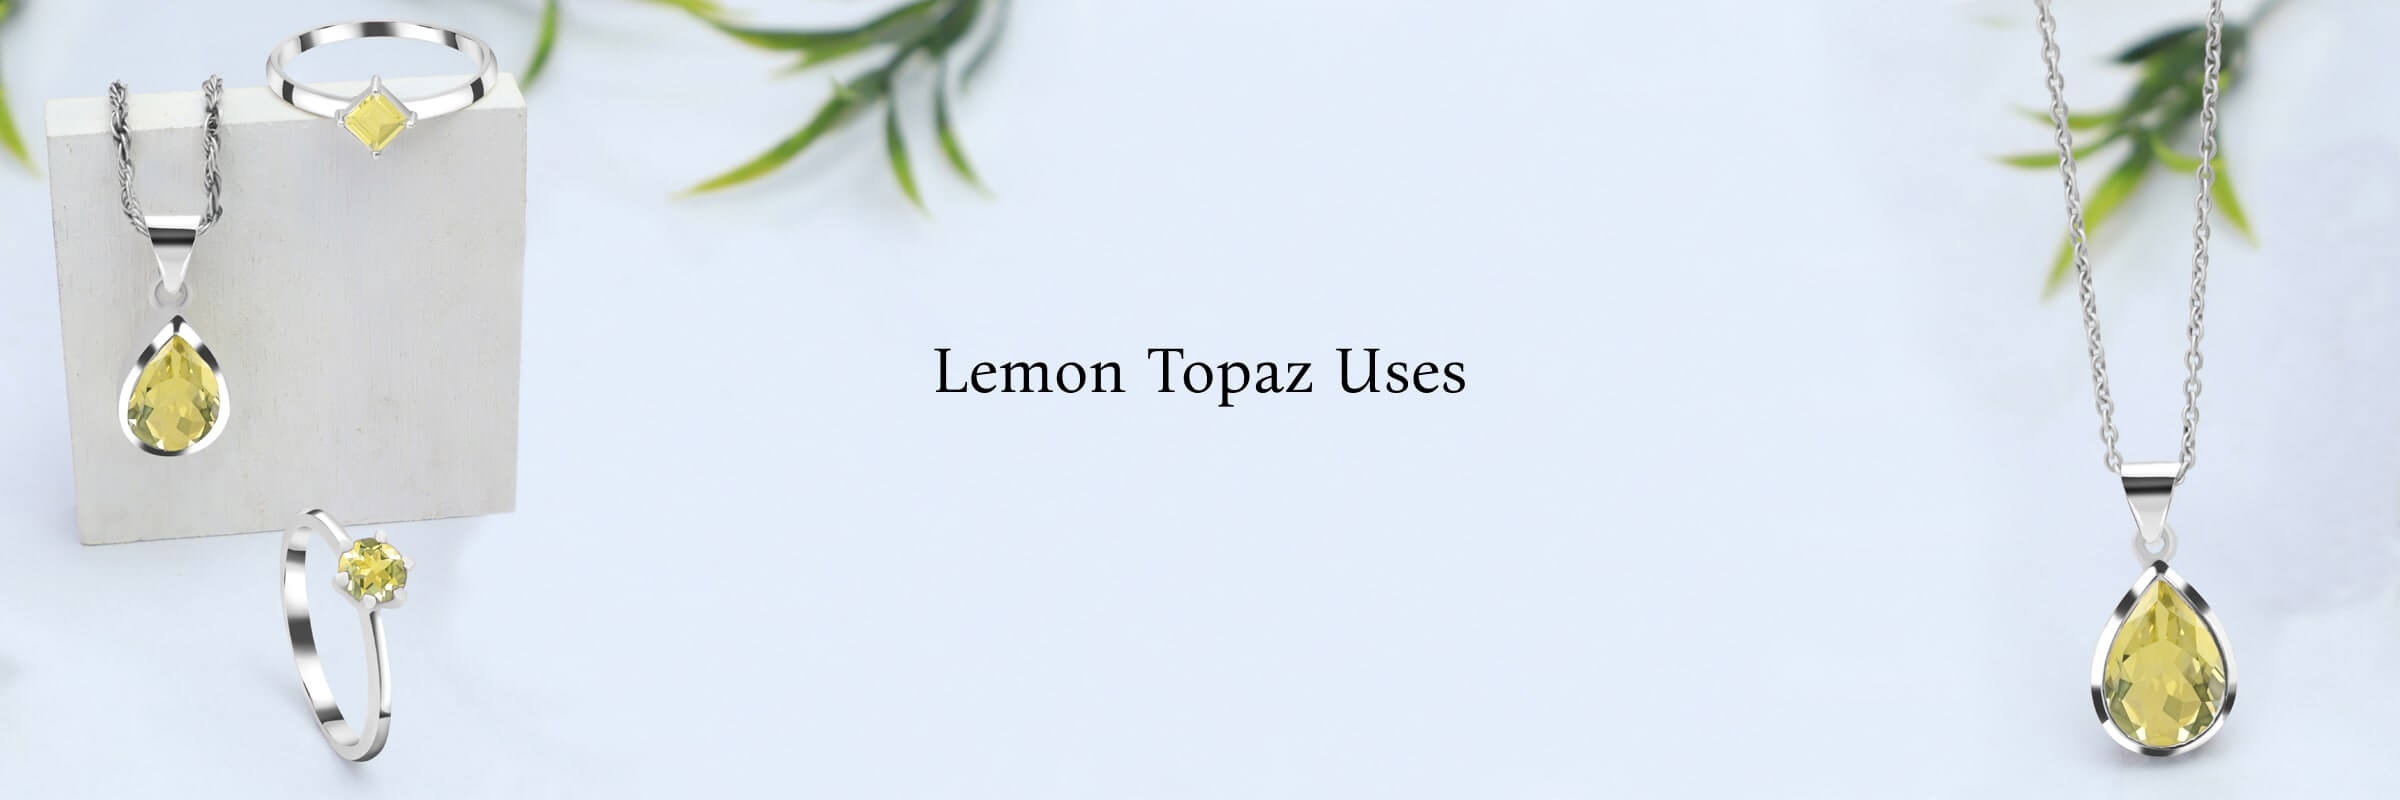 How to Use Lemon Topaz for Healing